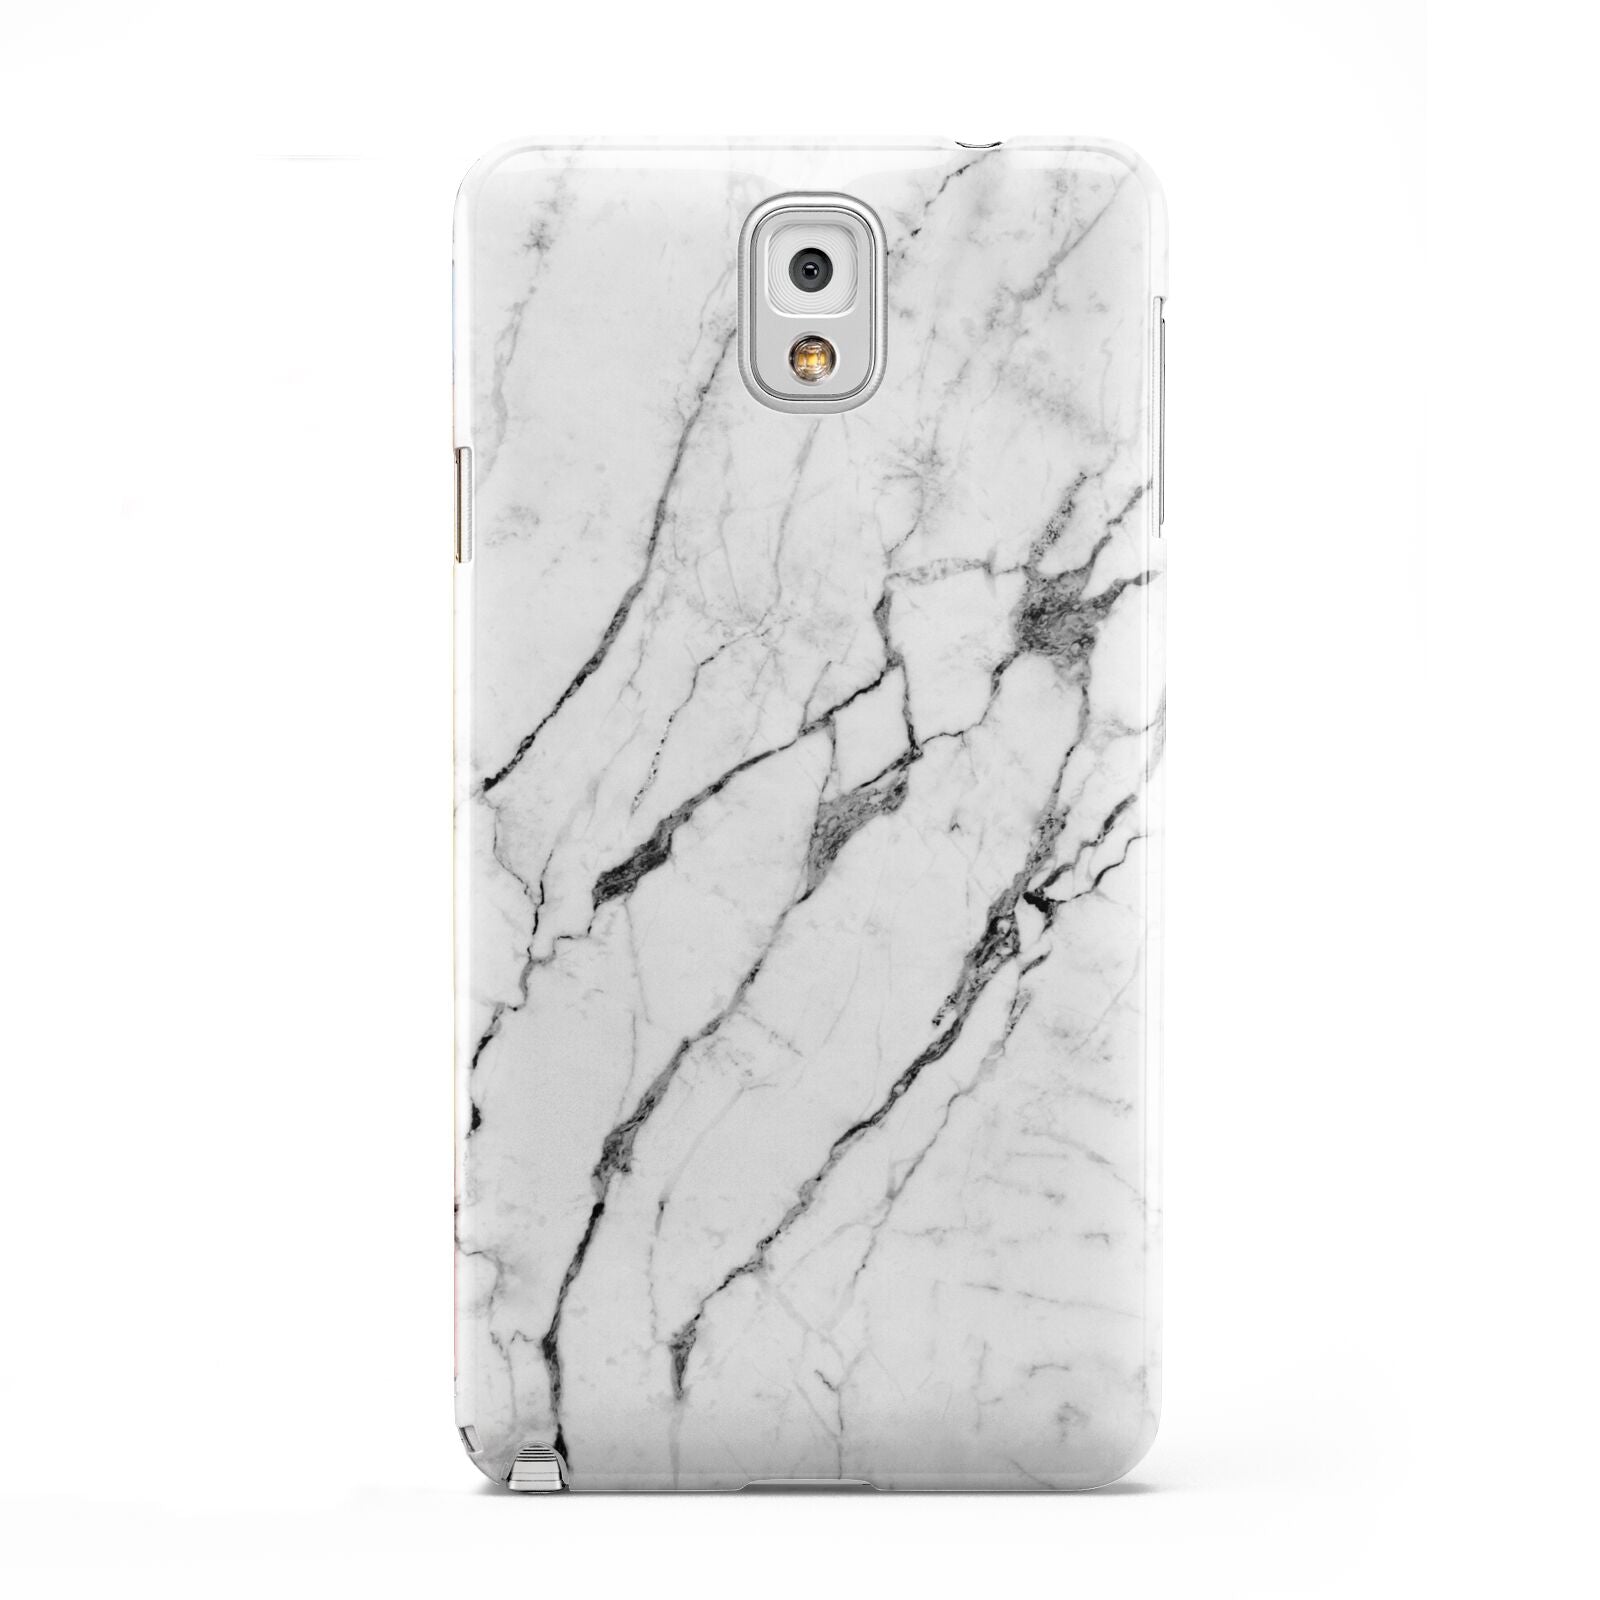 Marble White Samsung Galaxy Note 3 Case